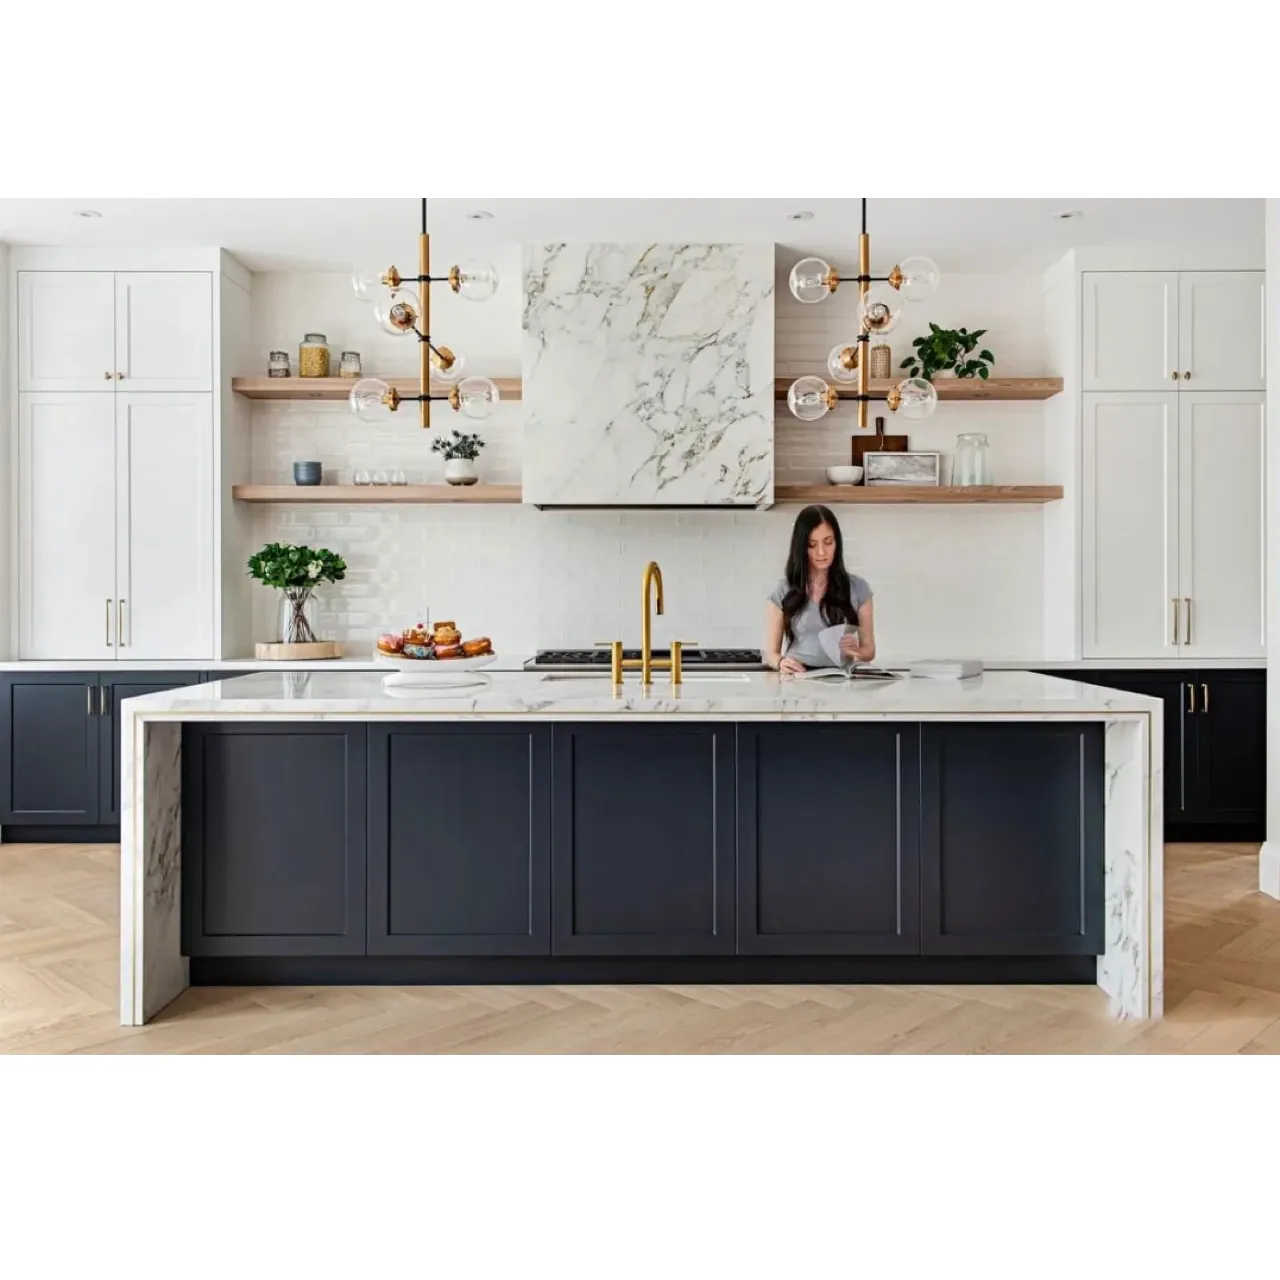 European Standard Custom Mdf Kitchen Sets Furniture Cabinet Modern